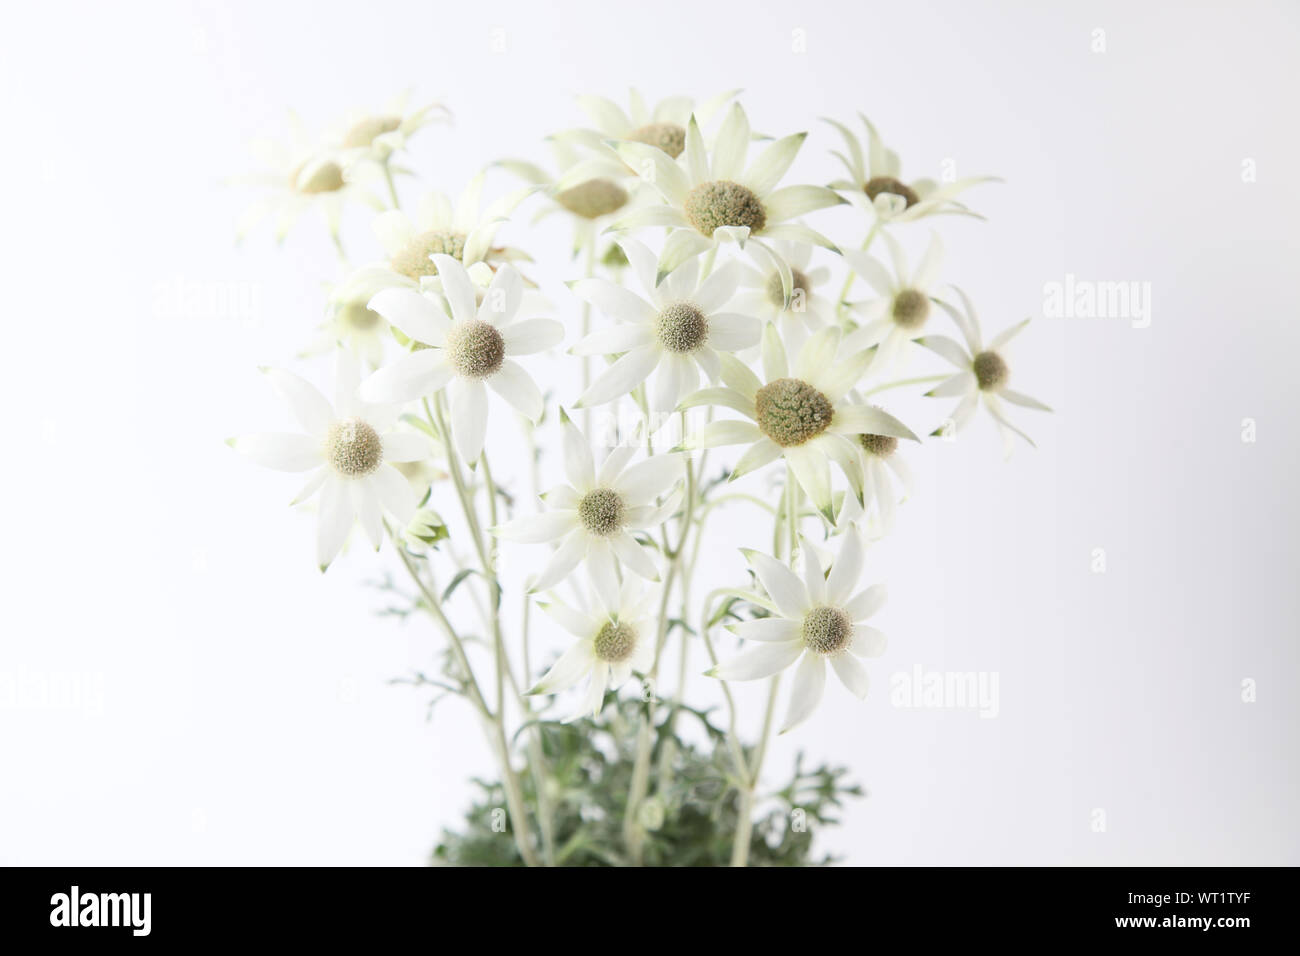 flannel flower Actinotus helianthi closeup isolated on white background Stock Photo